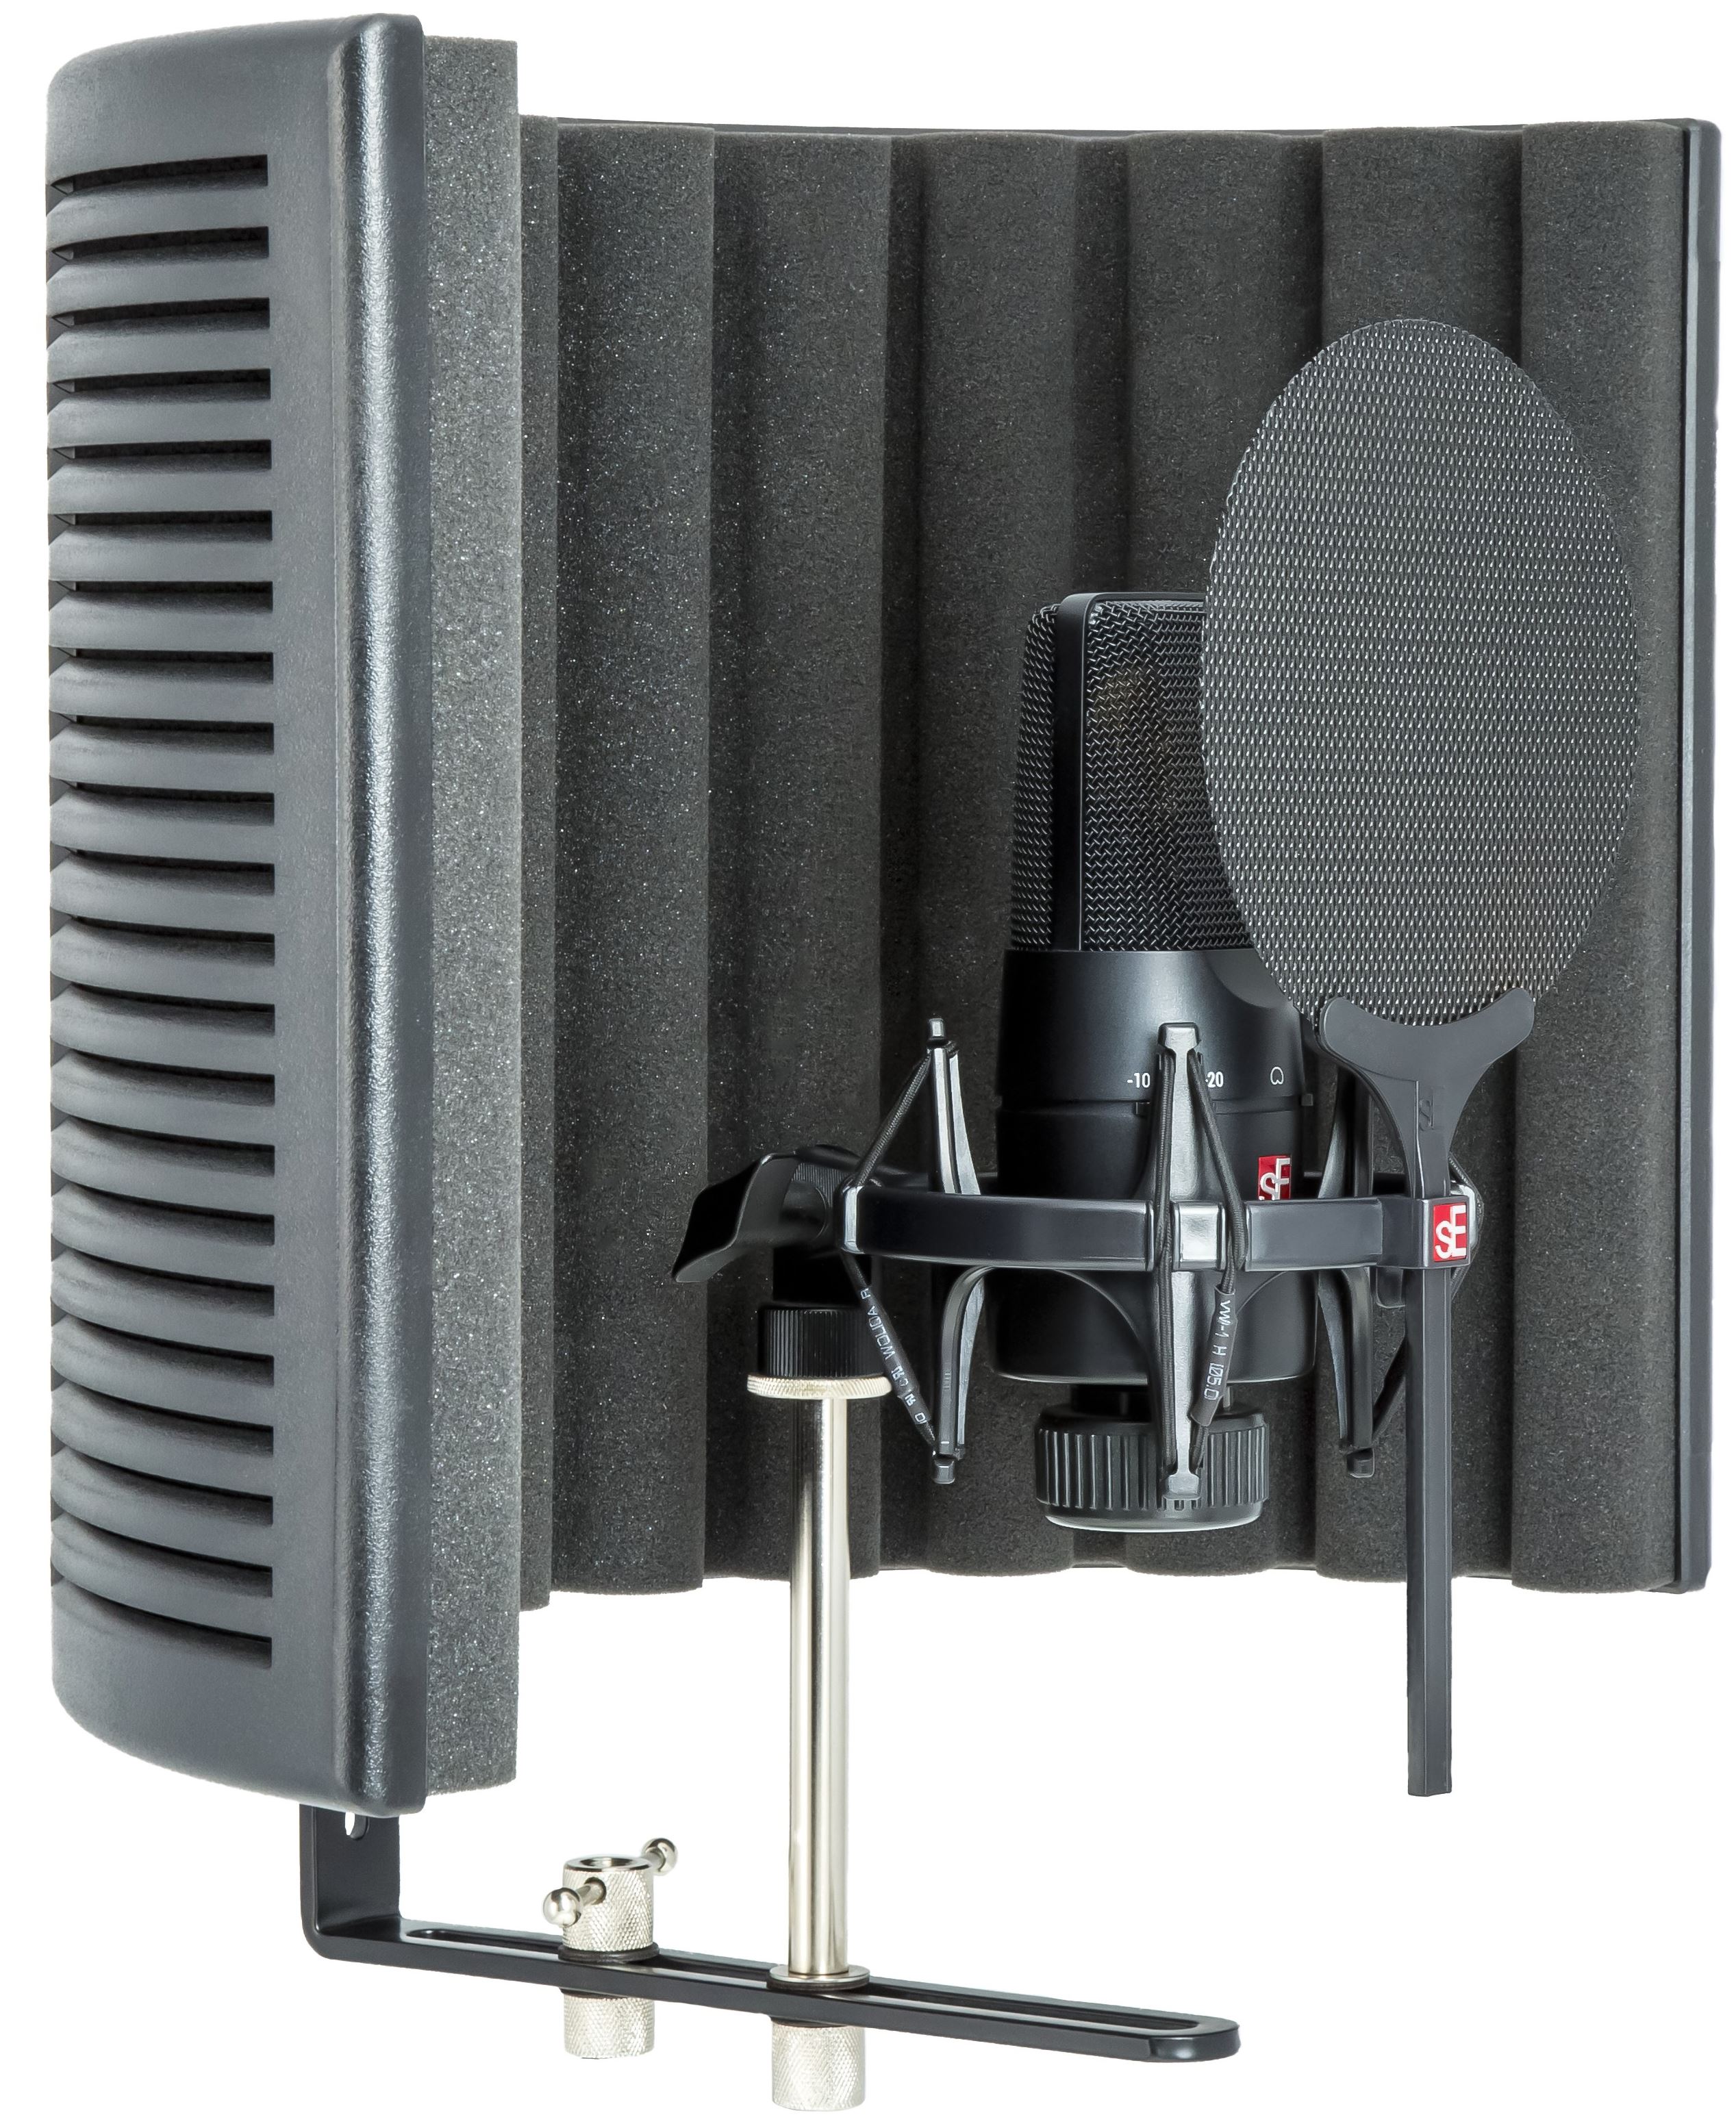 Osta sE Electronics - S Studio Bundle - Condenser Microphone + Accessories